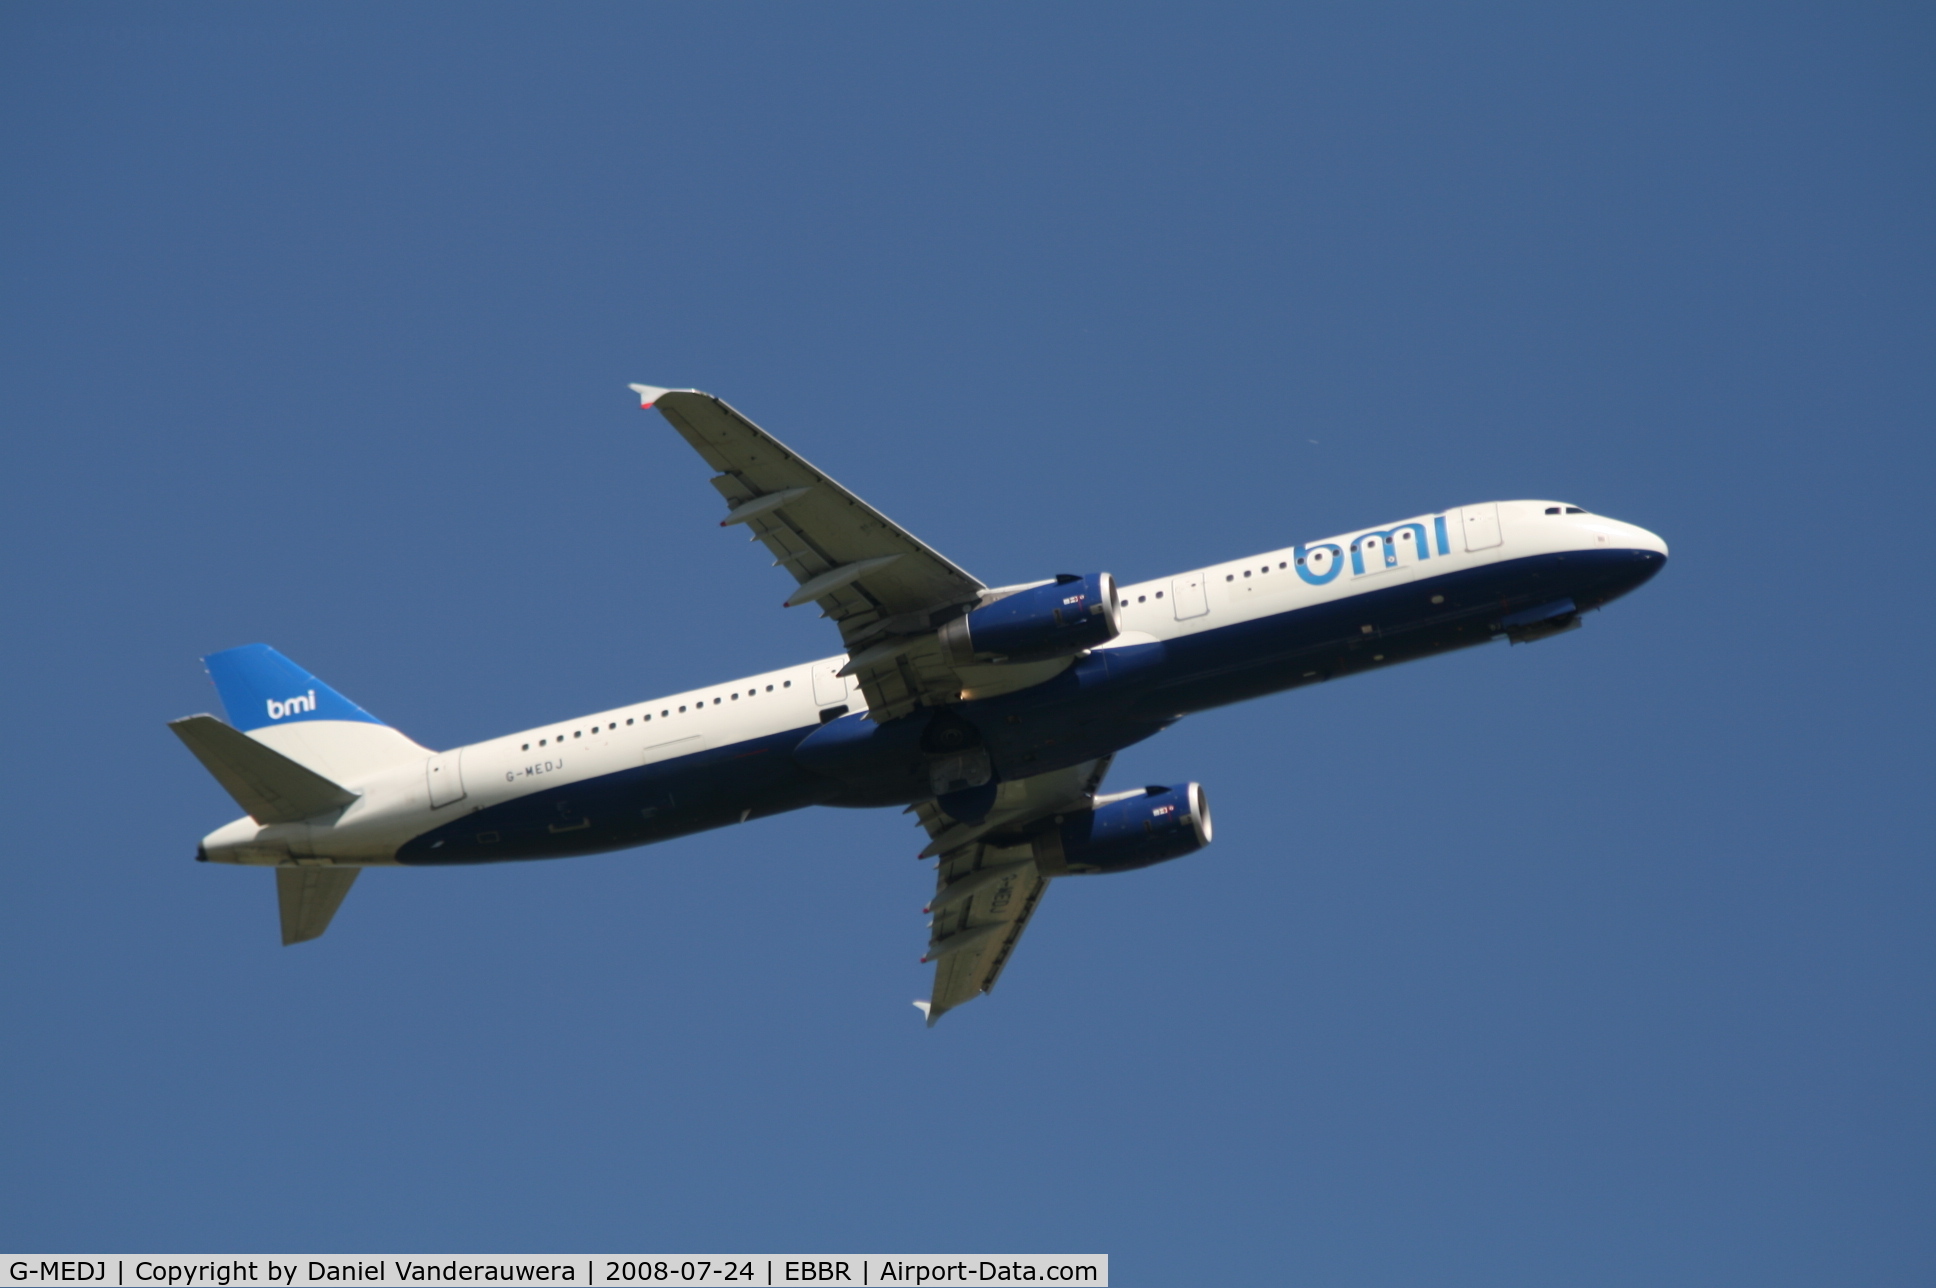 G-MEDJ, 2004 Airbus A321-231 C/N 2190, flight BD146 is taking off from rwy 07R